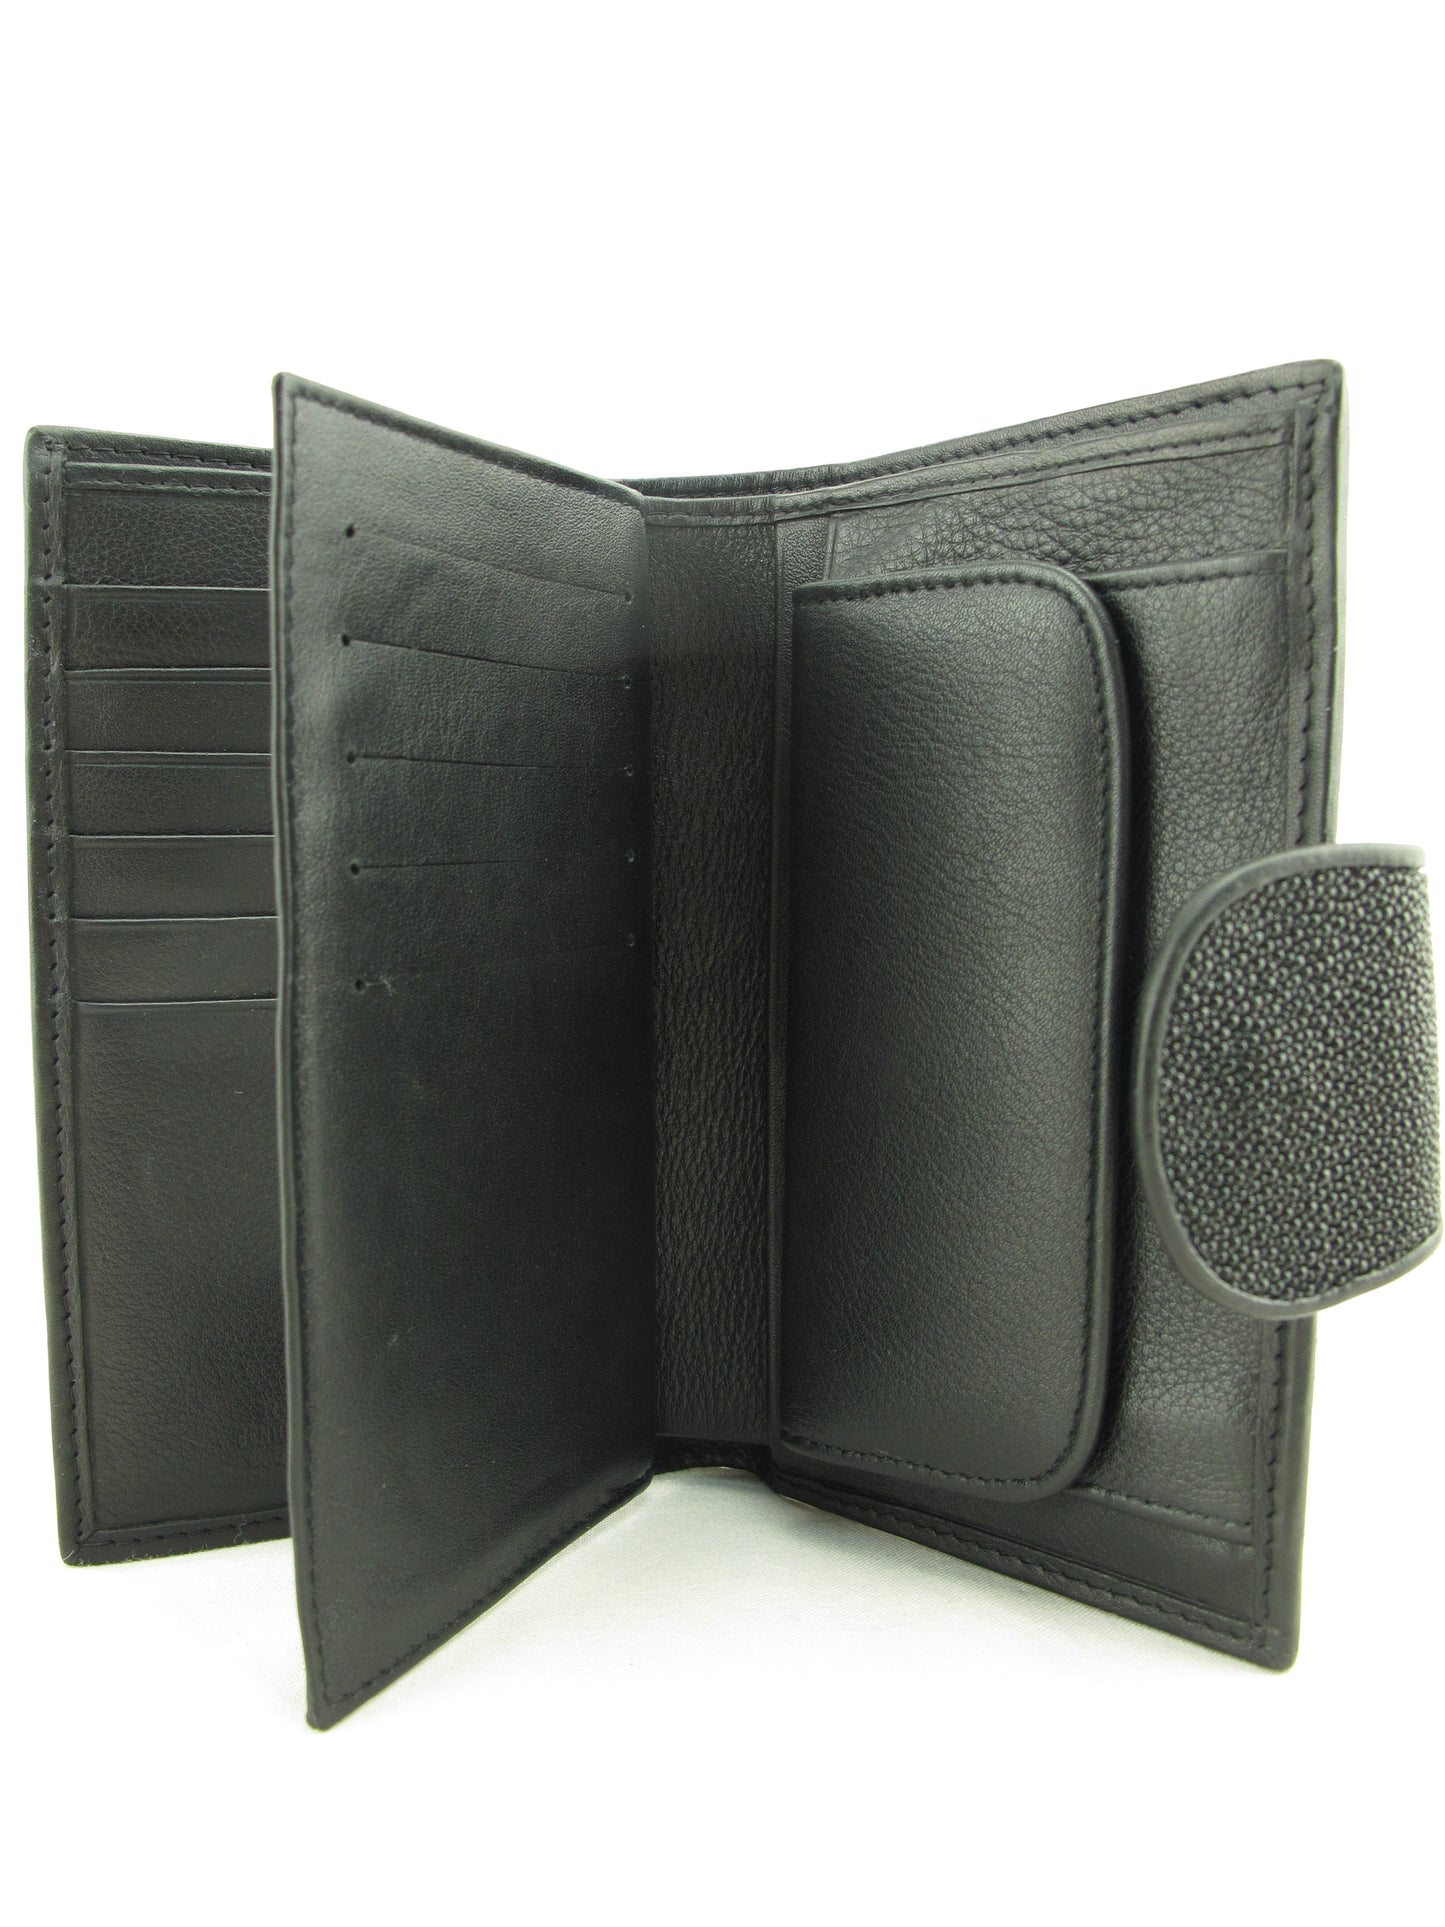 Genuine Stingray Skin Leather Medium Clutch Wallet Coins Purse